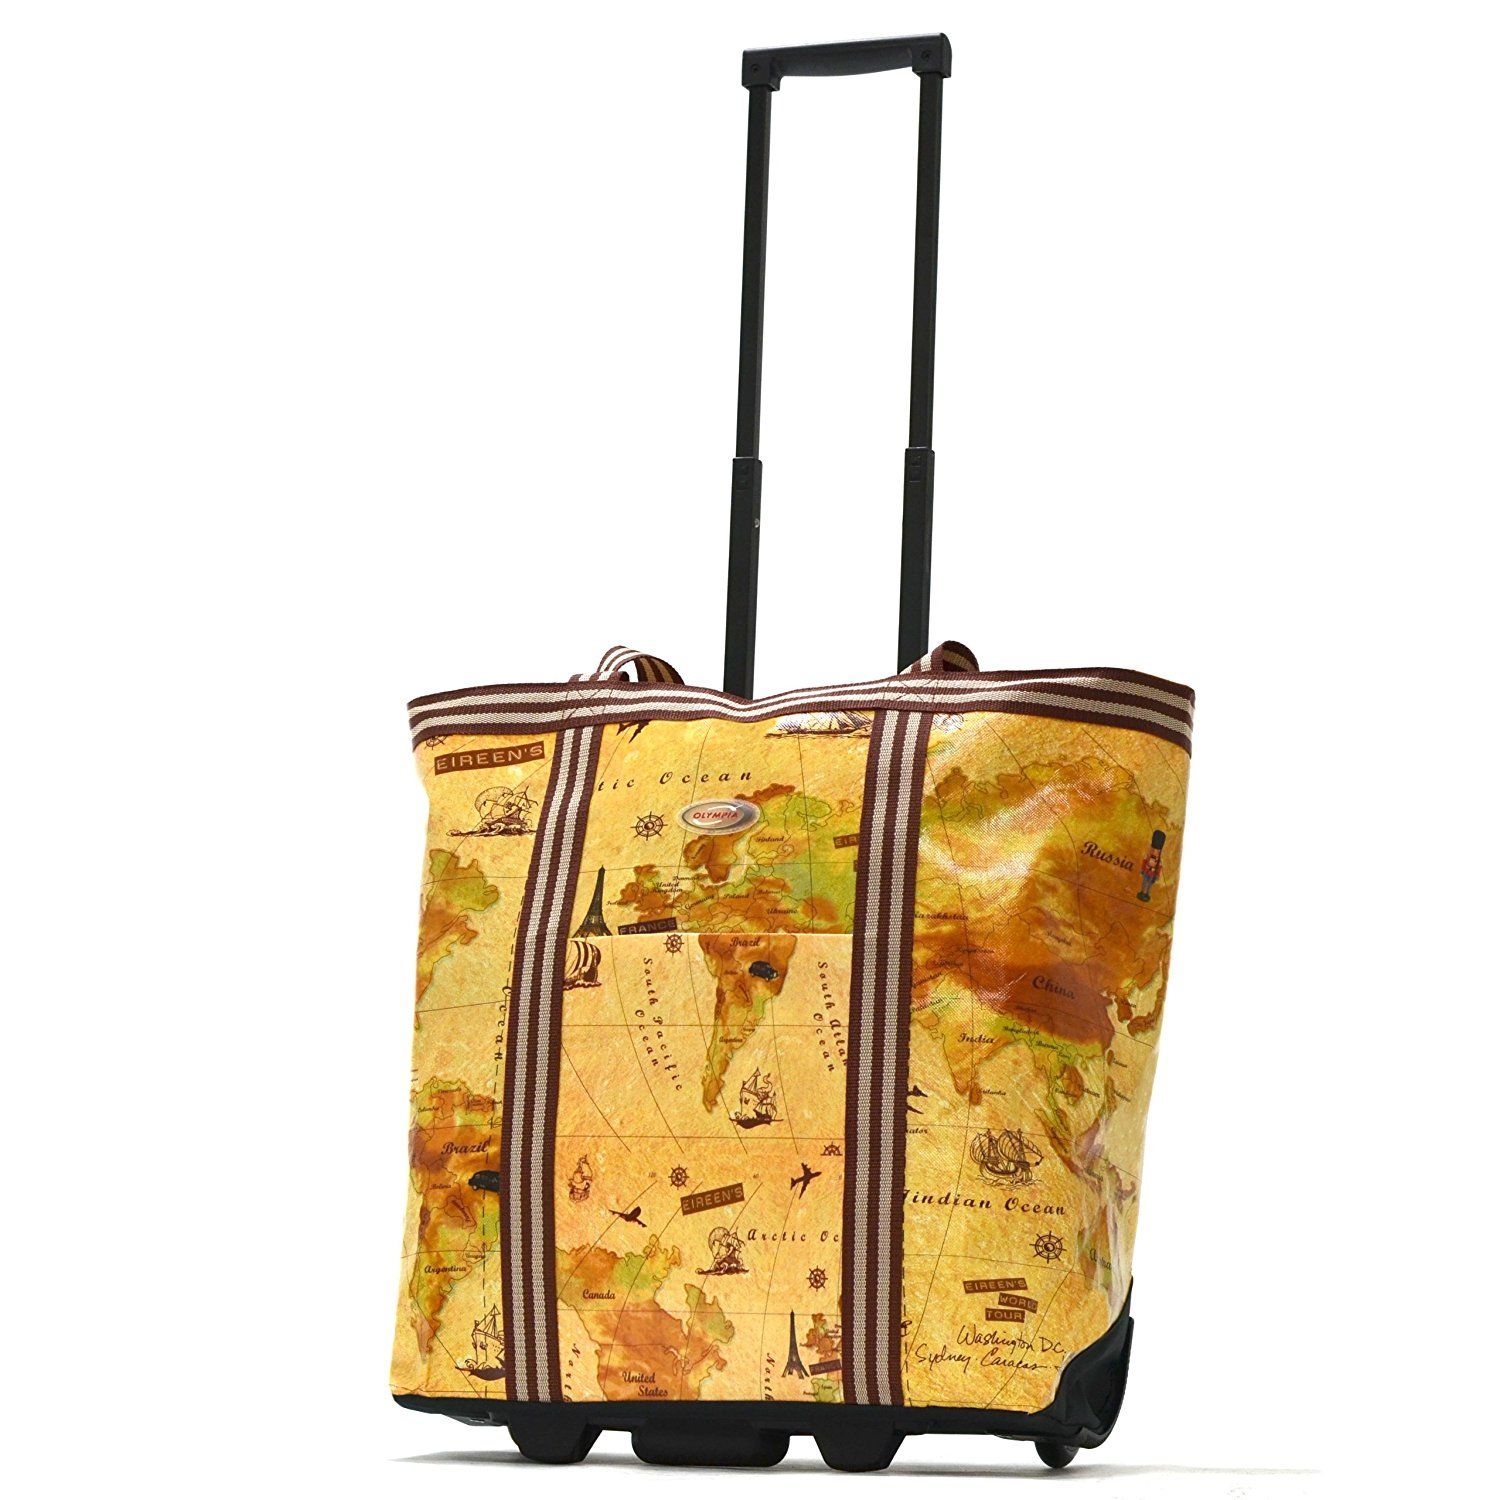 Portable Folding Shopping Trolley Cart Lightweight Foldable Luggage Wheels Bag 